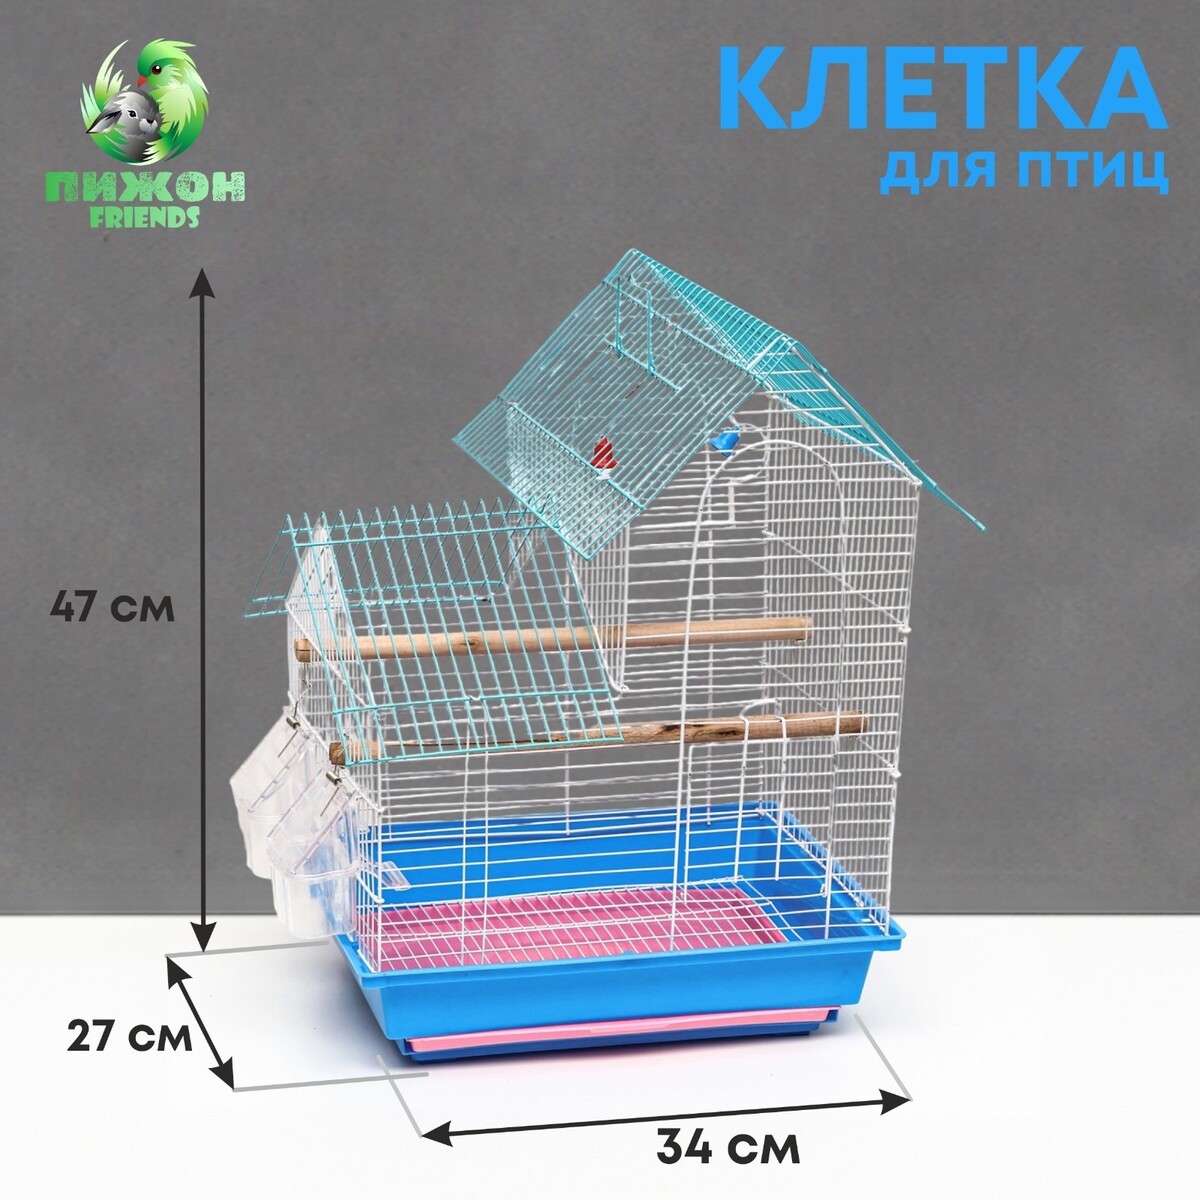 Клетка для птиц укомплектованная bd-2/5h, 34 х 27 х 47 см, синяя клетка для птиц двойная крыша укомплектованная 34 х 27 х 47 см красная